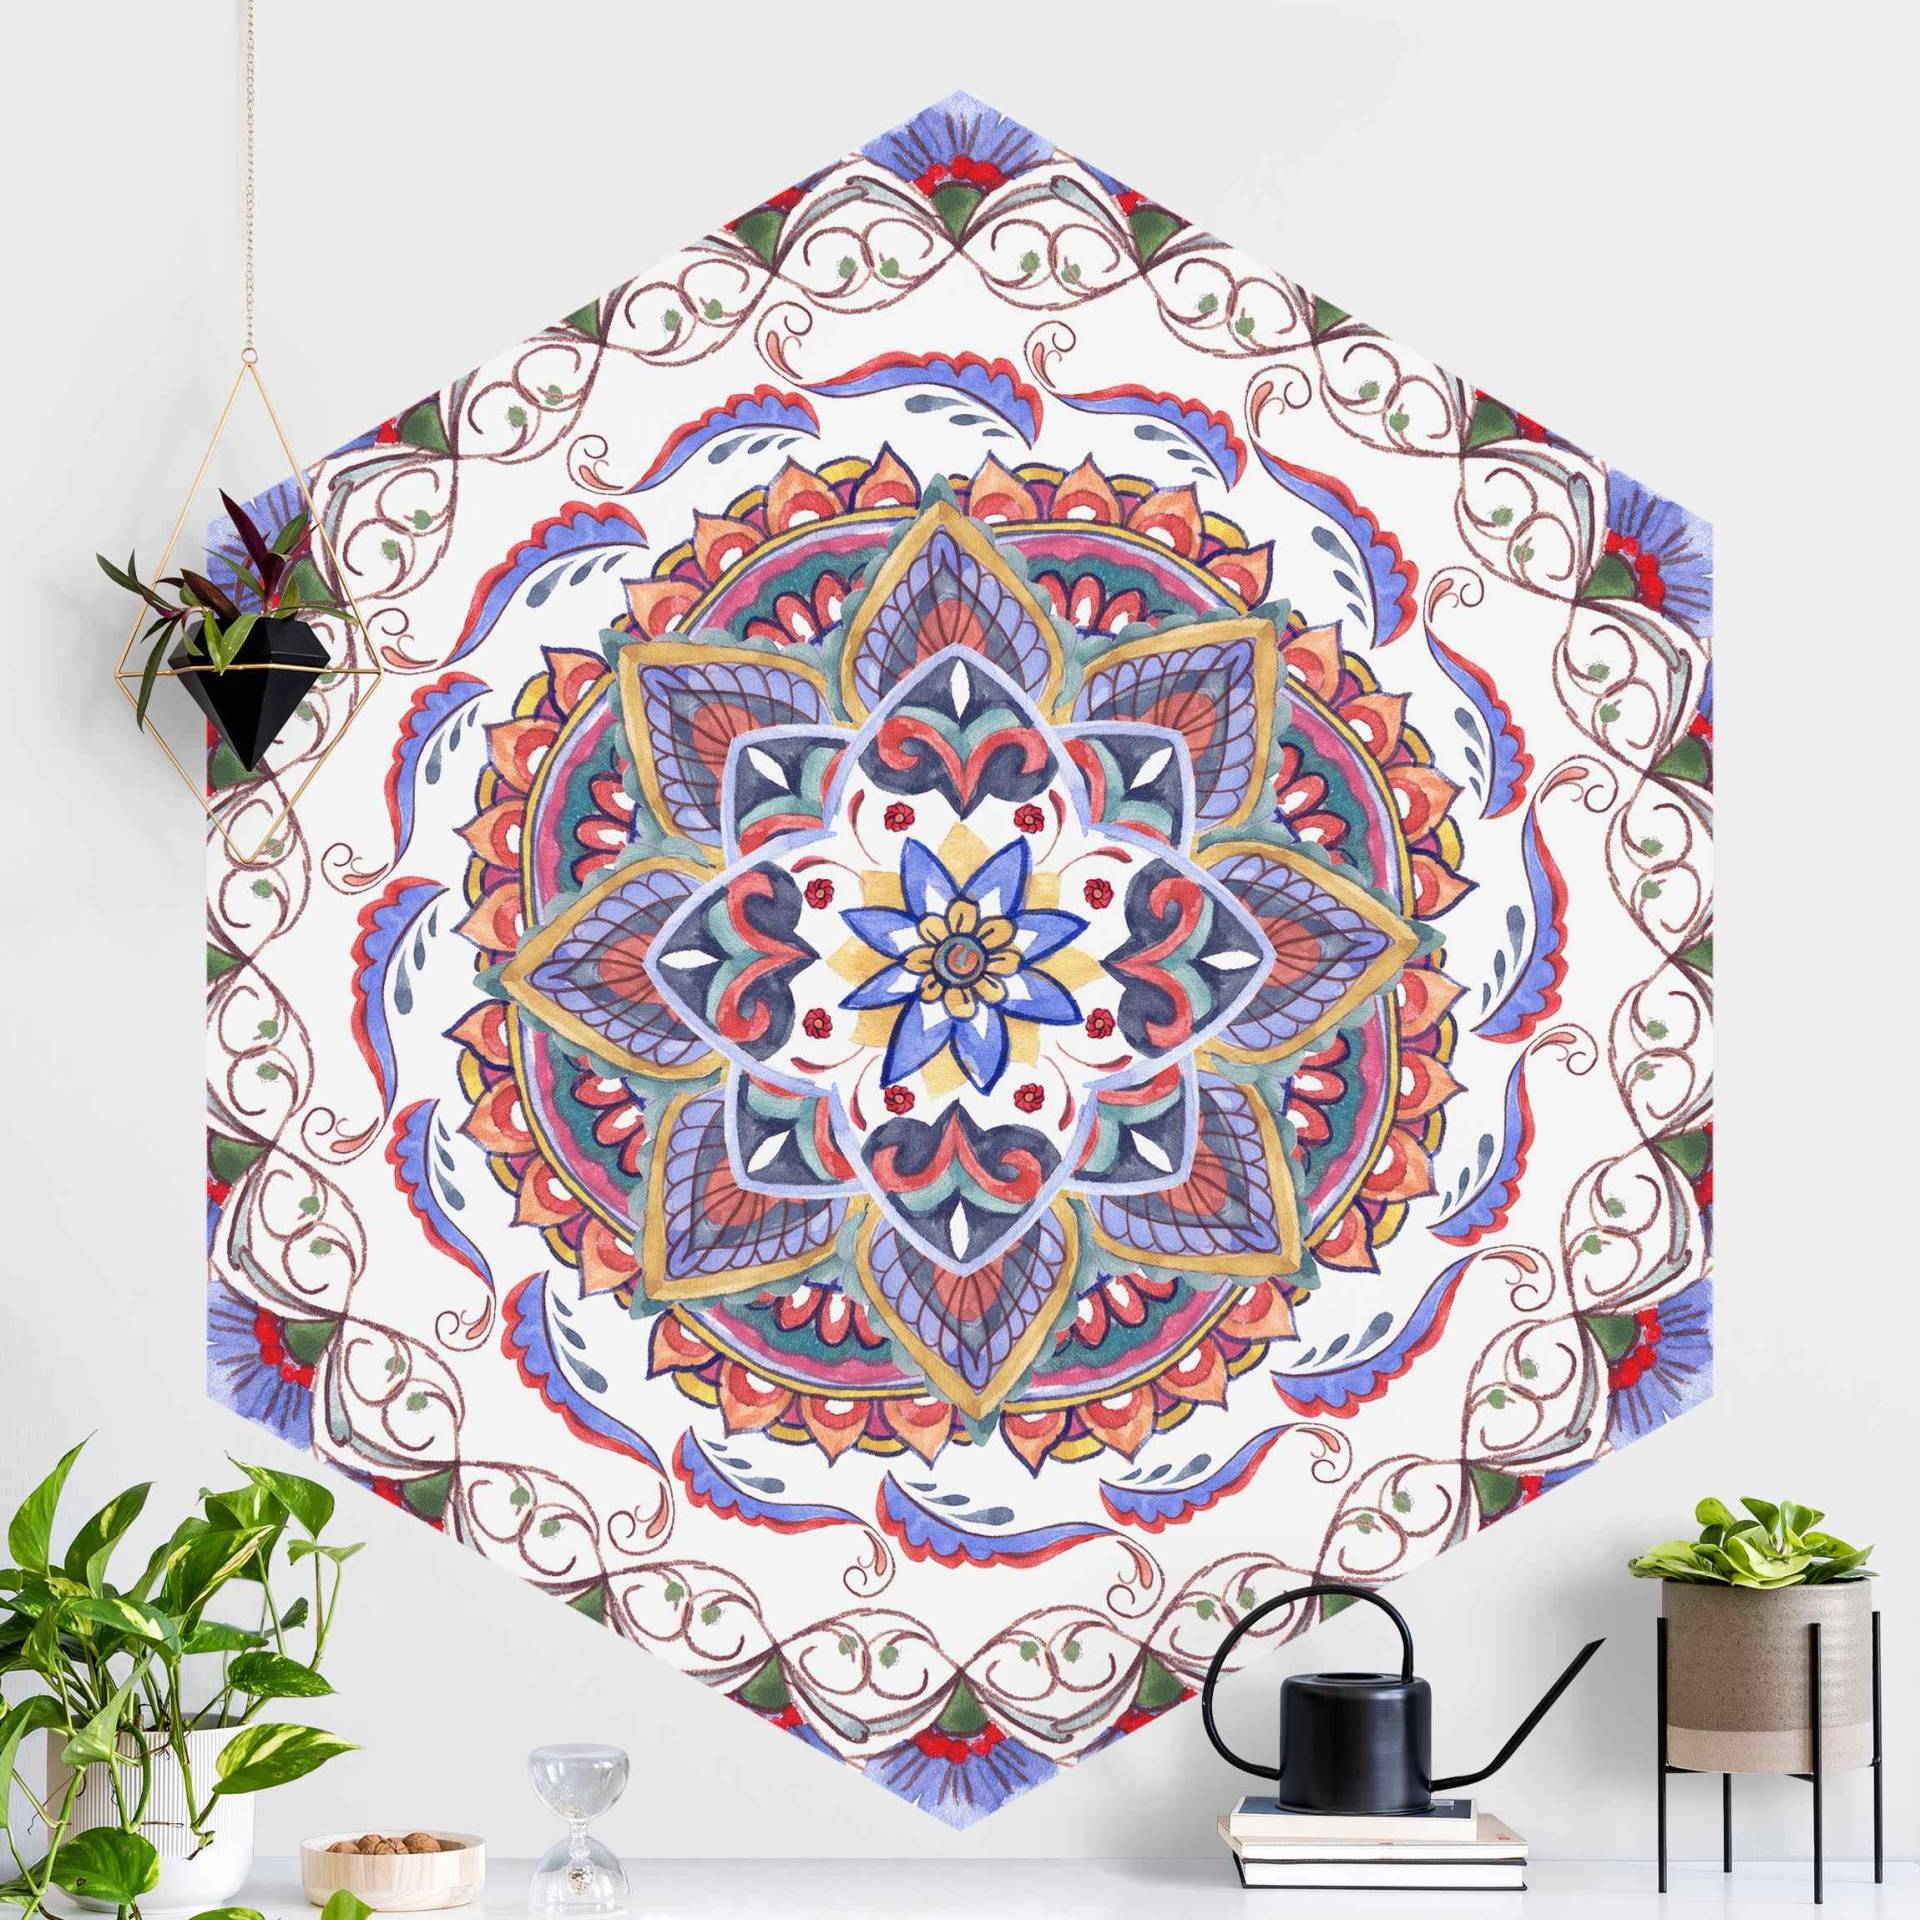 Hexagon Mustertapete selbstklebend Mandala Meditation Pranayama von Klebefieber